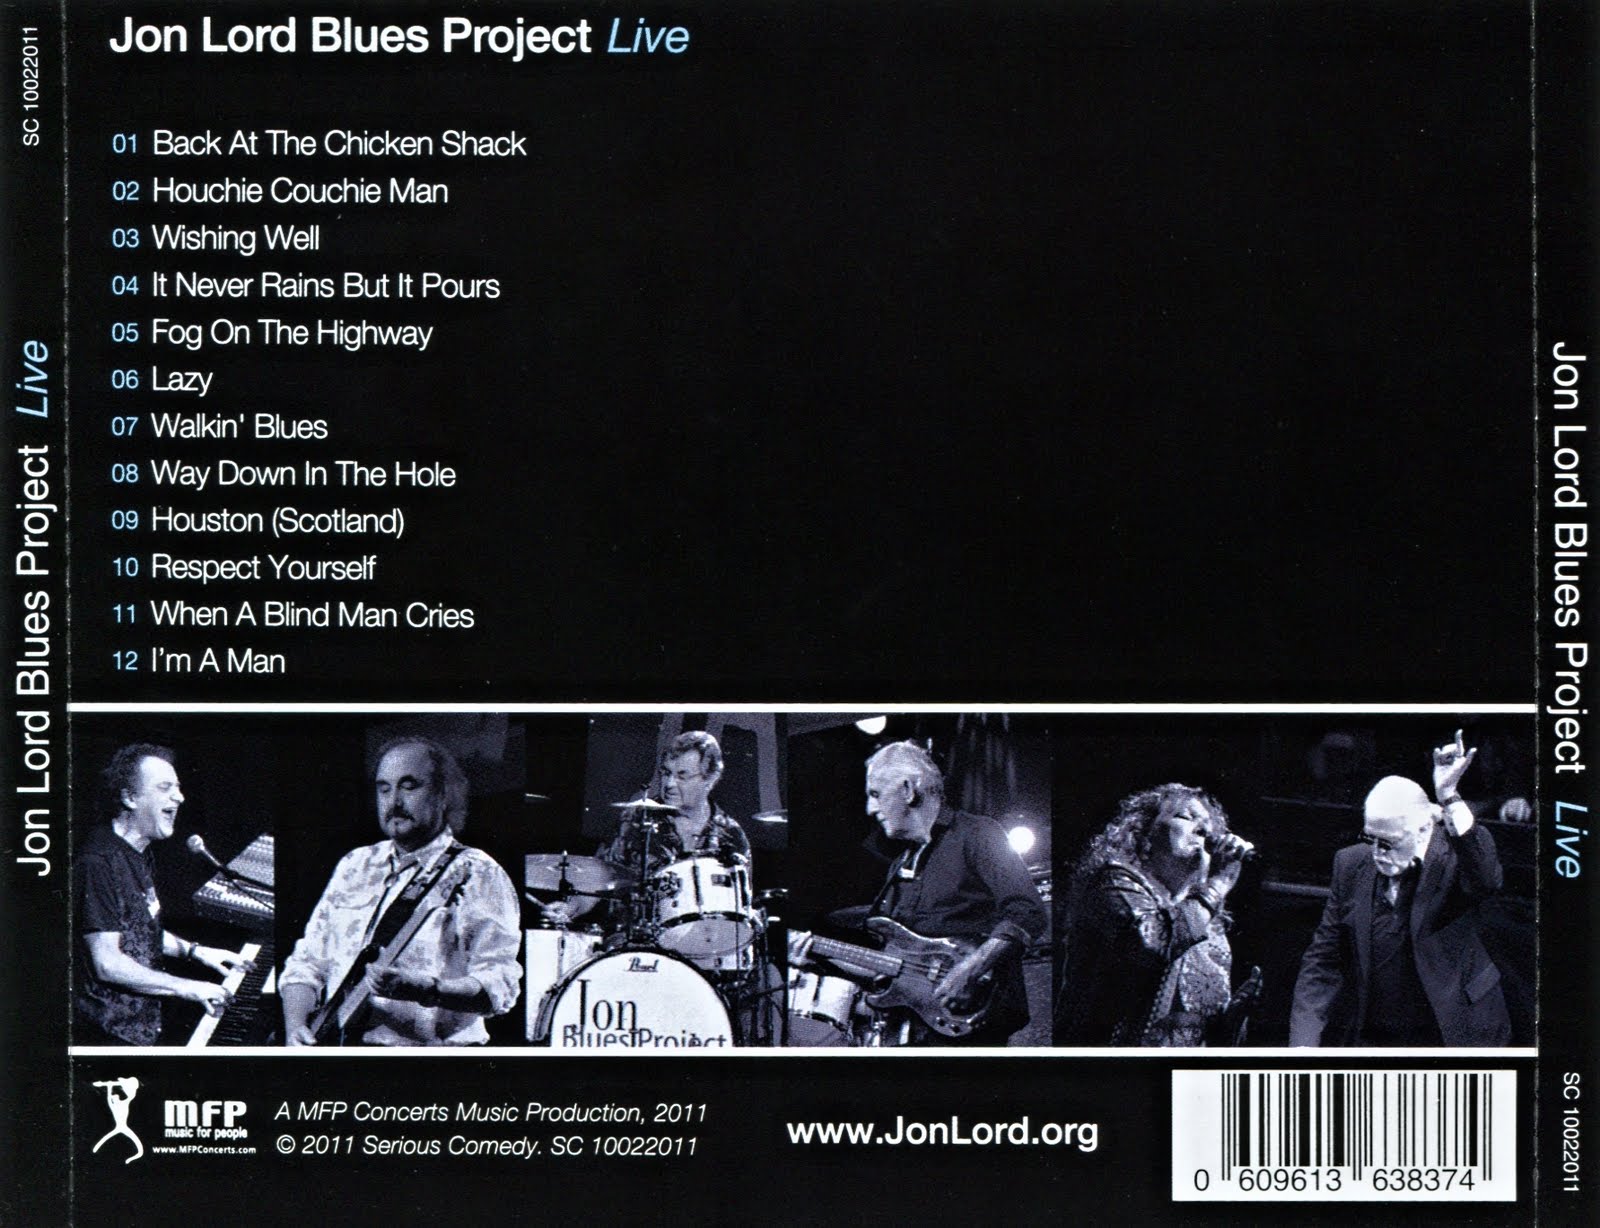 Review: Jon Lord Blues Project, vinyl edition Jon Lord